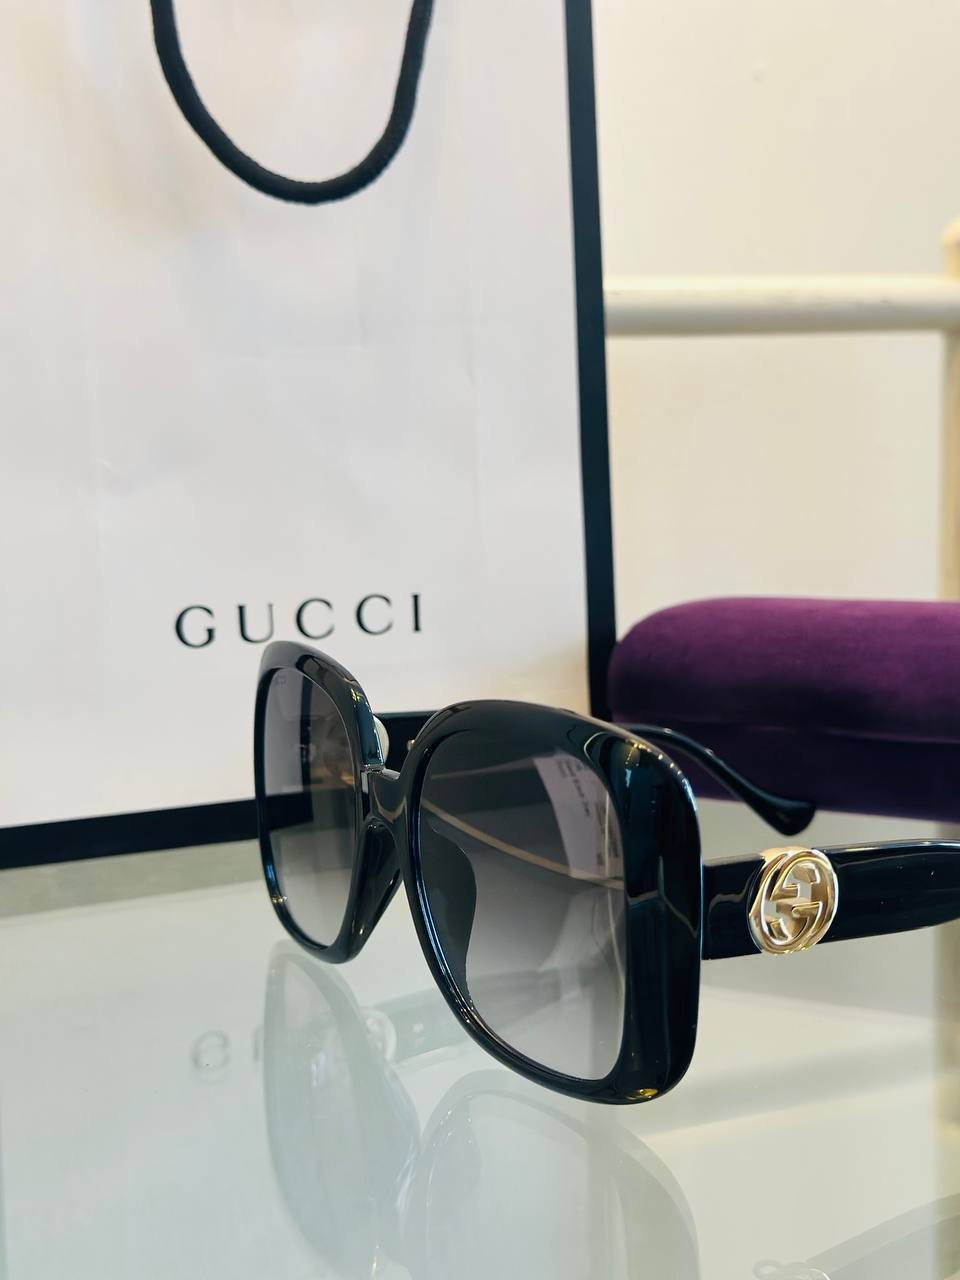 Gucci sunglass